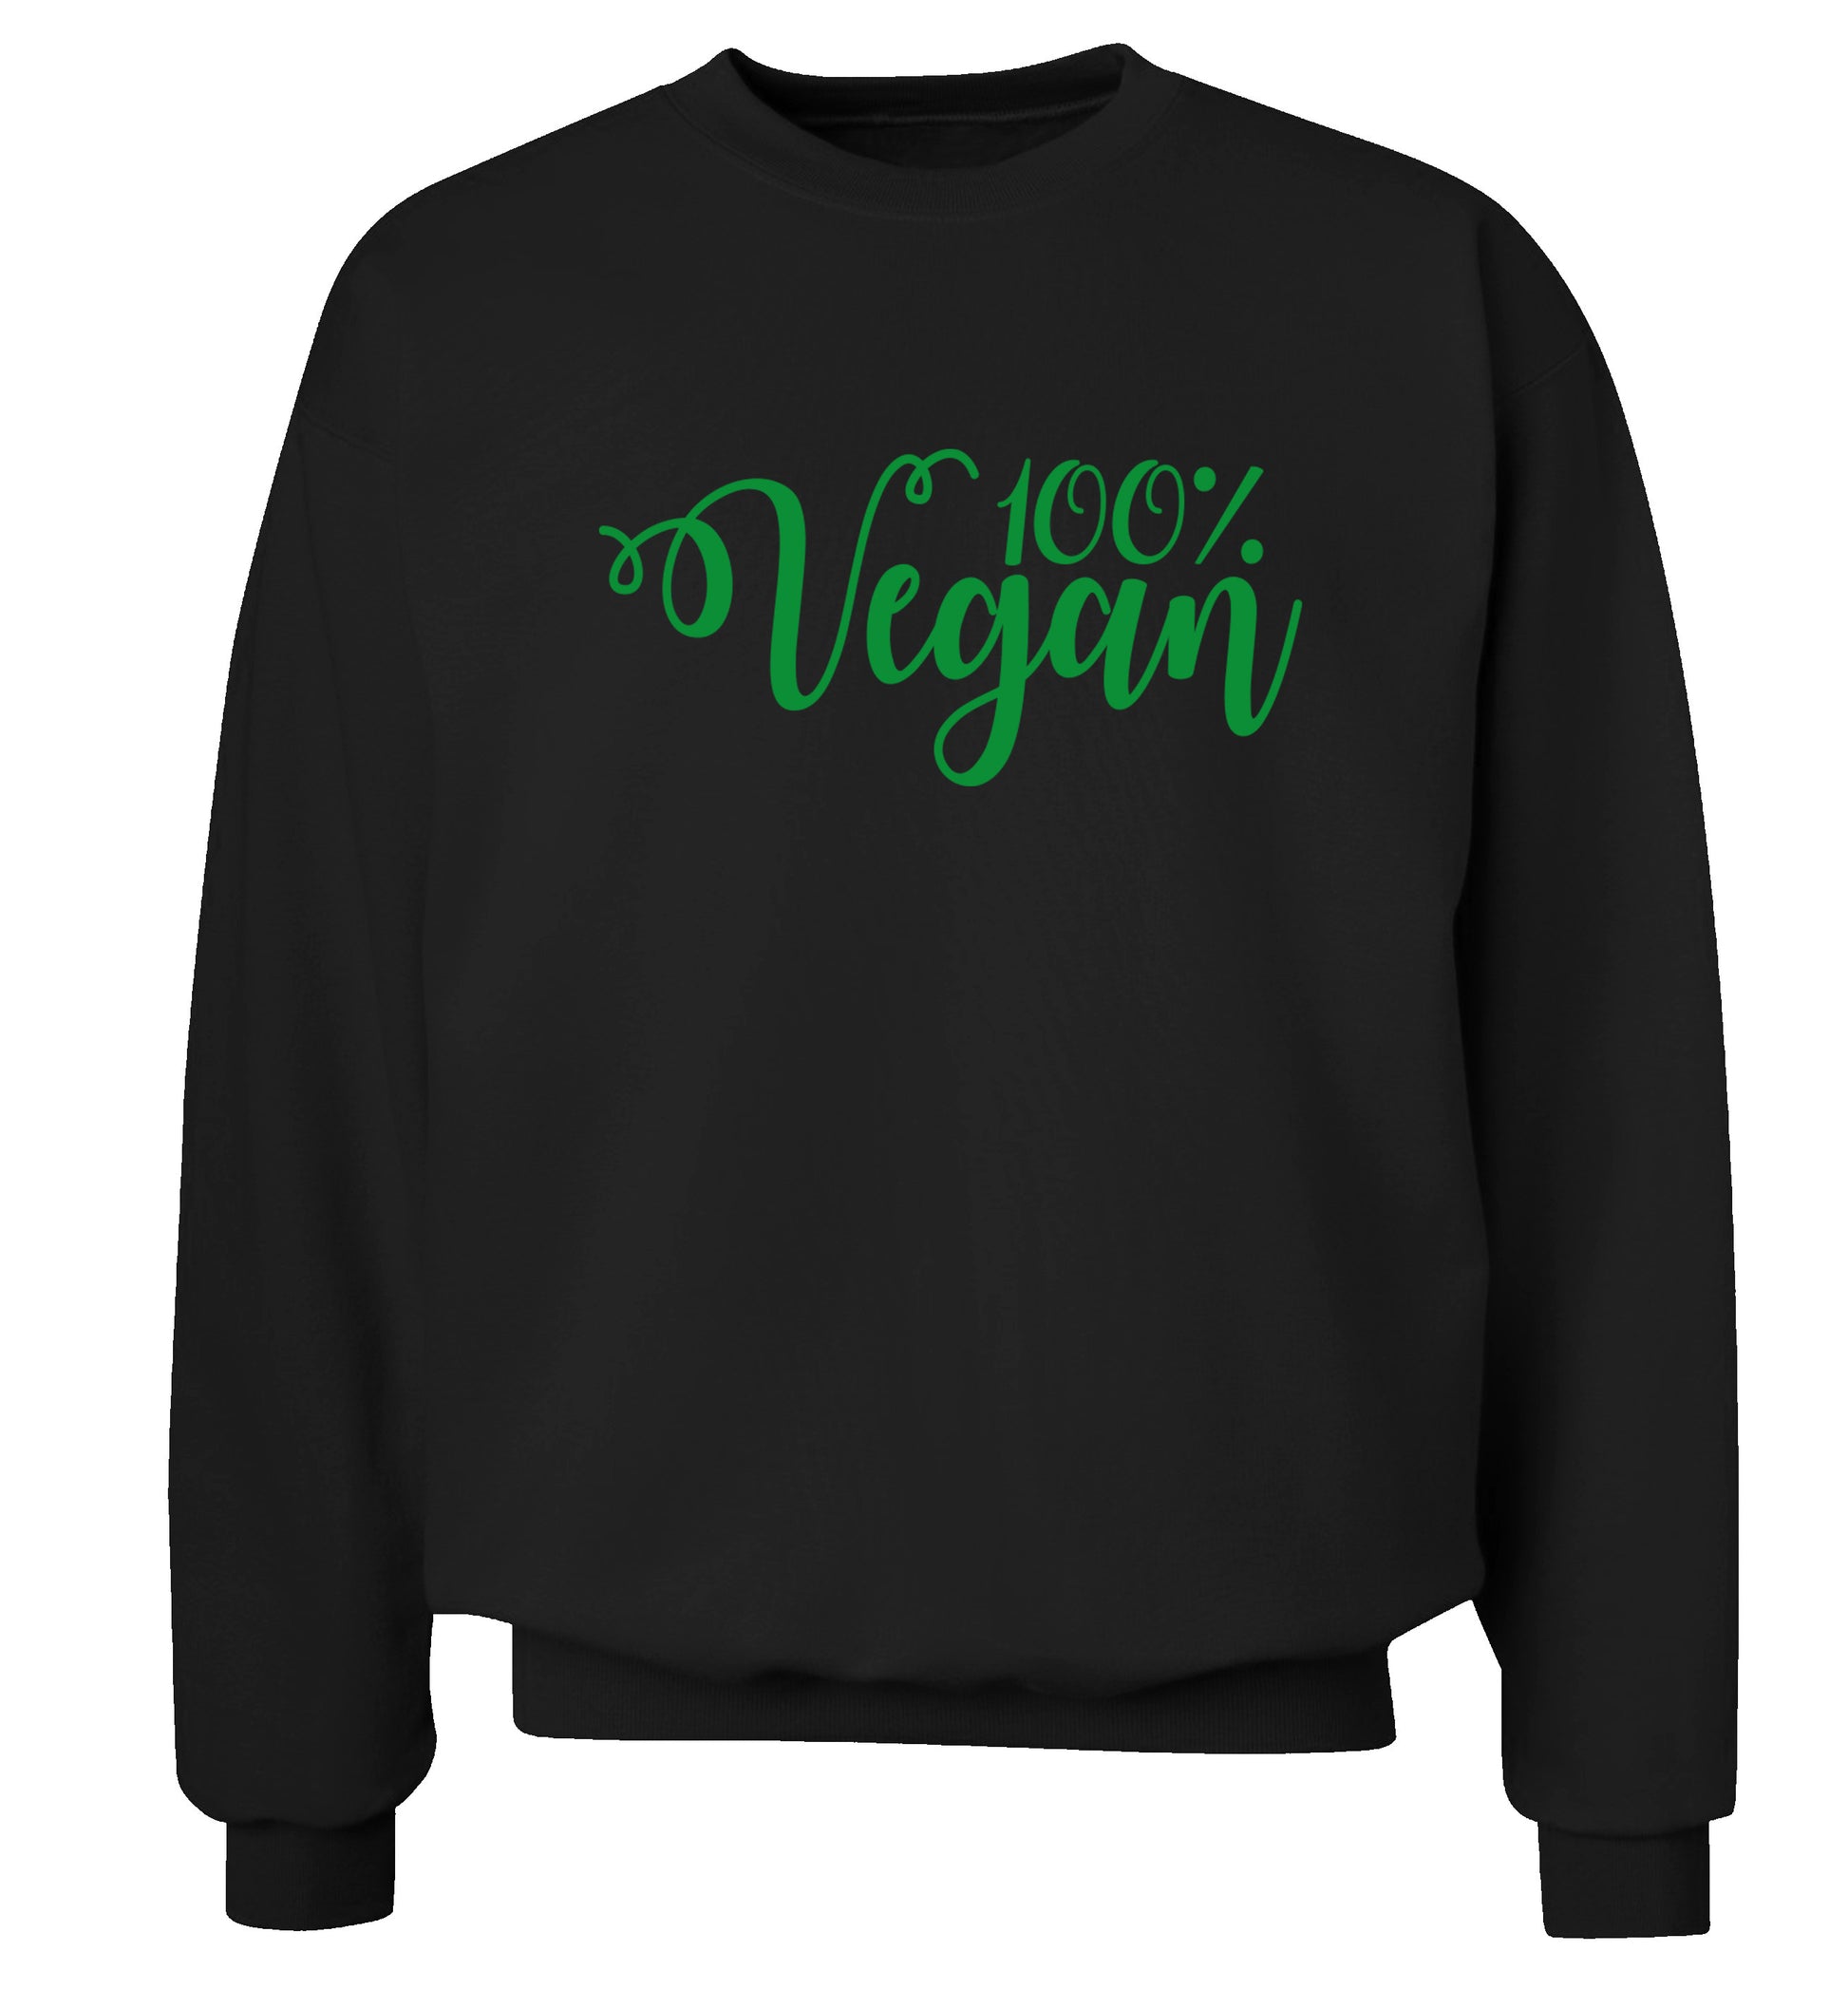 100% Vegan Adult's unisex black Sweater 2XL